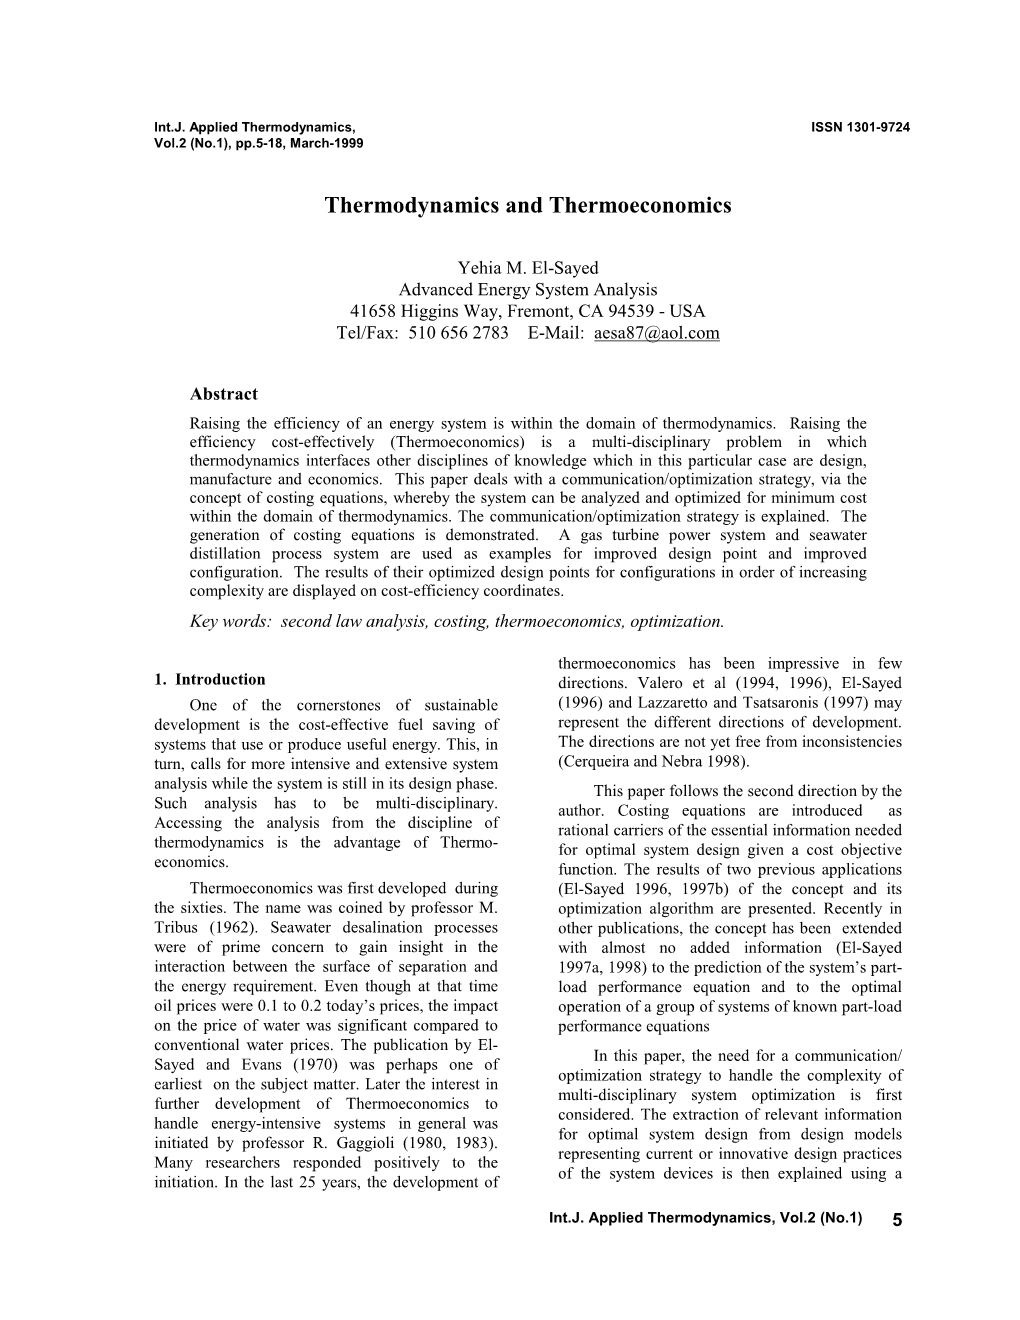 Thermodynamics and Thermoeconomics